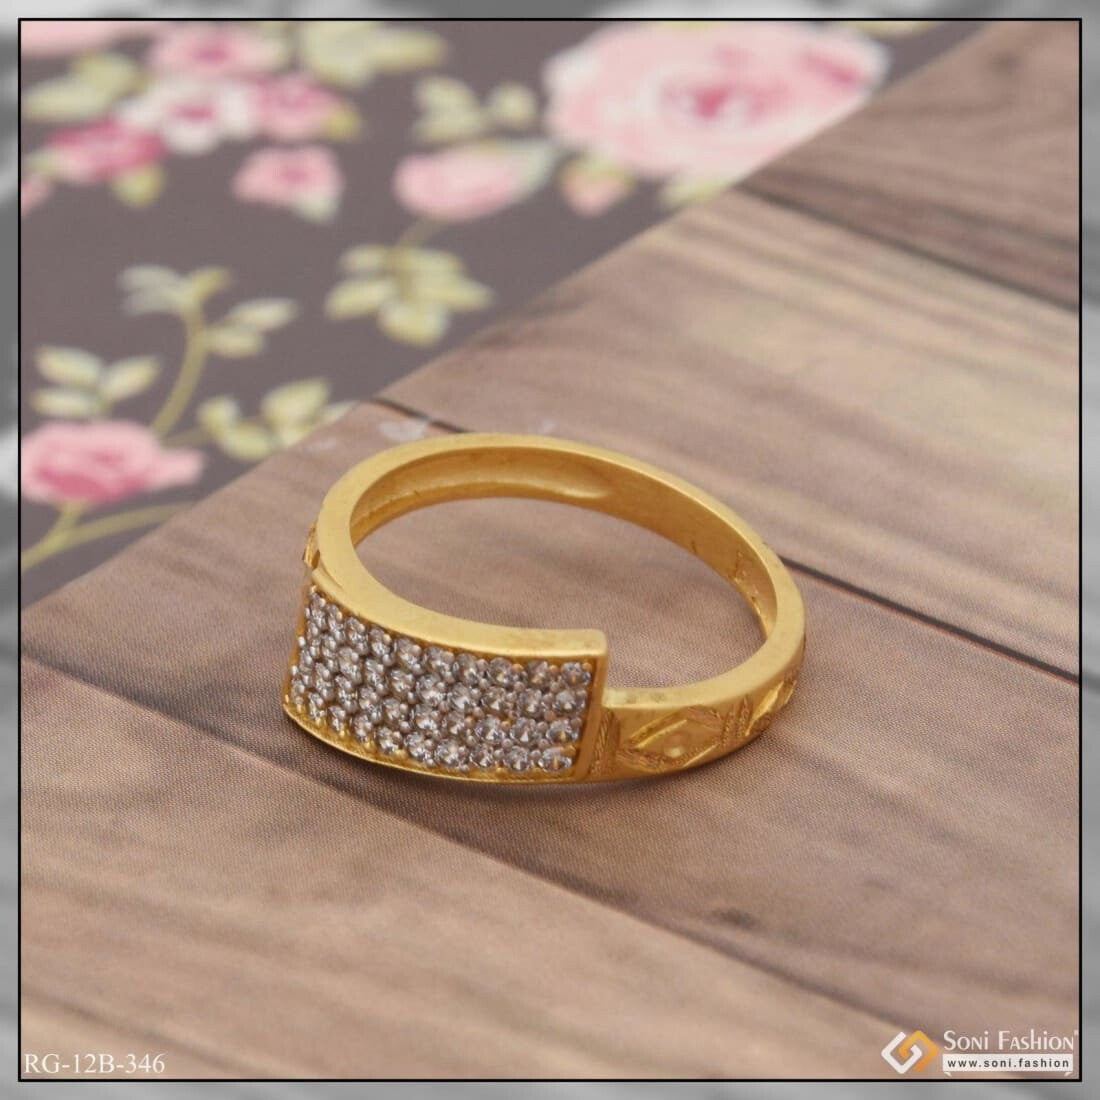 1 Gram Gold Plated With Diamond Cute Design Best Quality Ring For Men -  Style B342 at Rs 1240.00, सोने का पानी चढ़ी हुई अंगूठी - Soni Fashion,  Rajkot